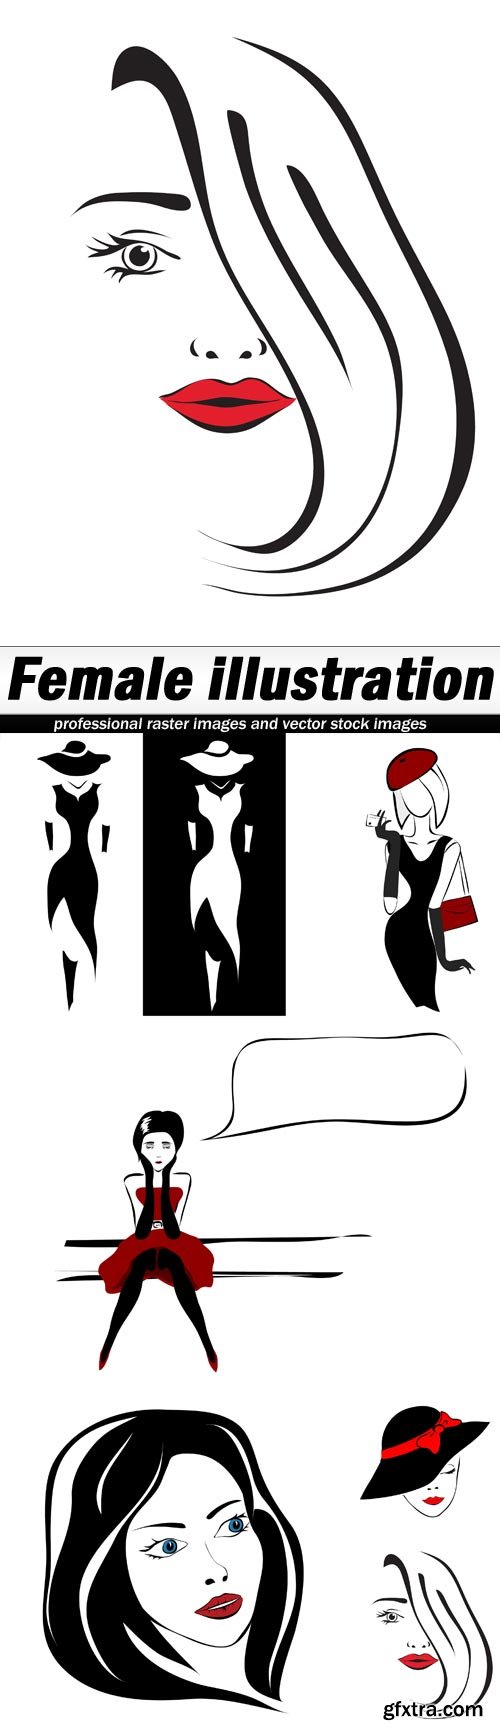 Female illustration